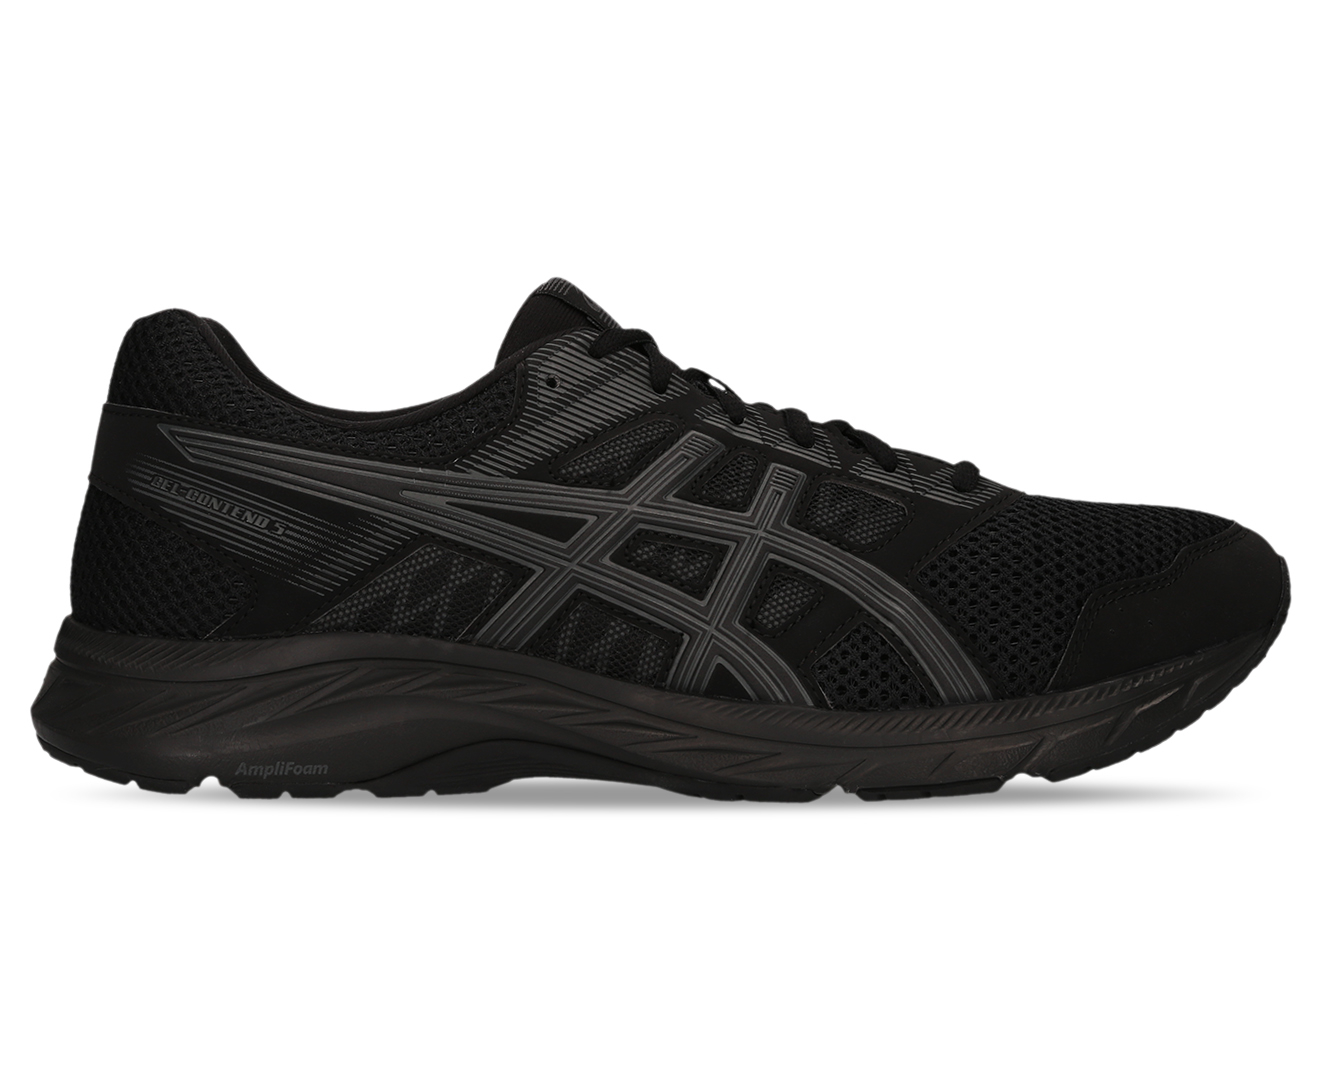 ASICS Men's GEL-Contend 5 Running Sports Shoes - Black/Dark Grey ...